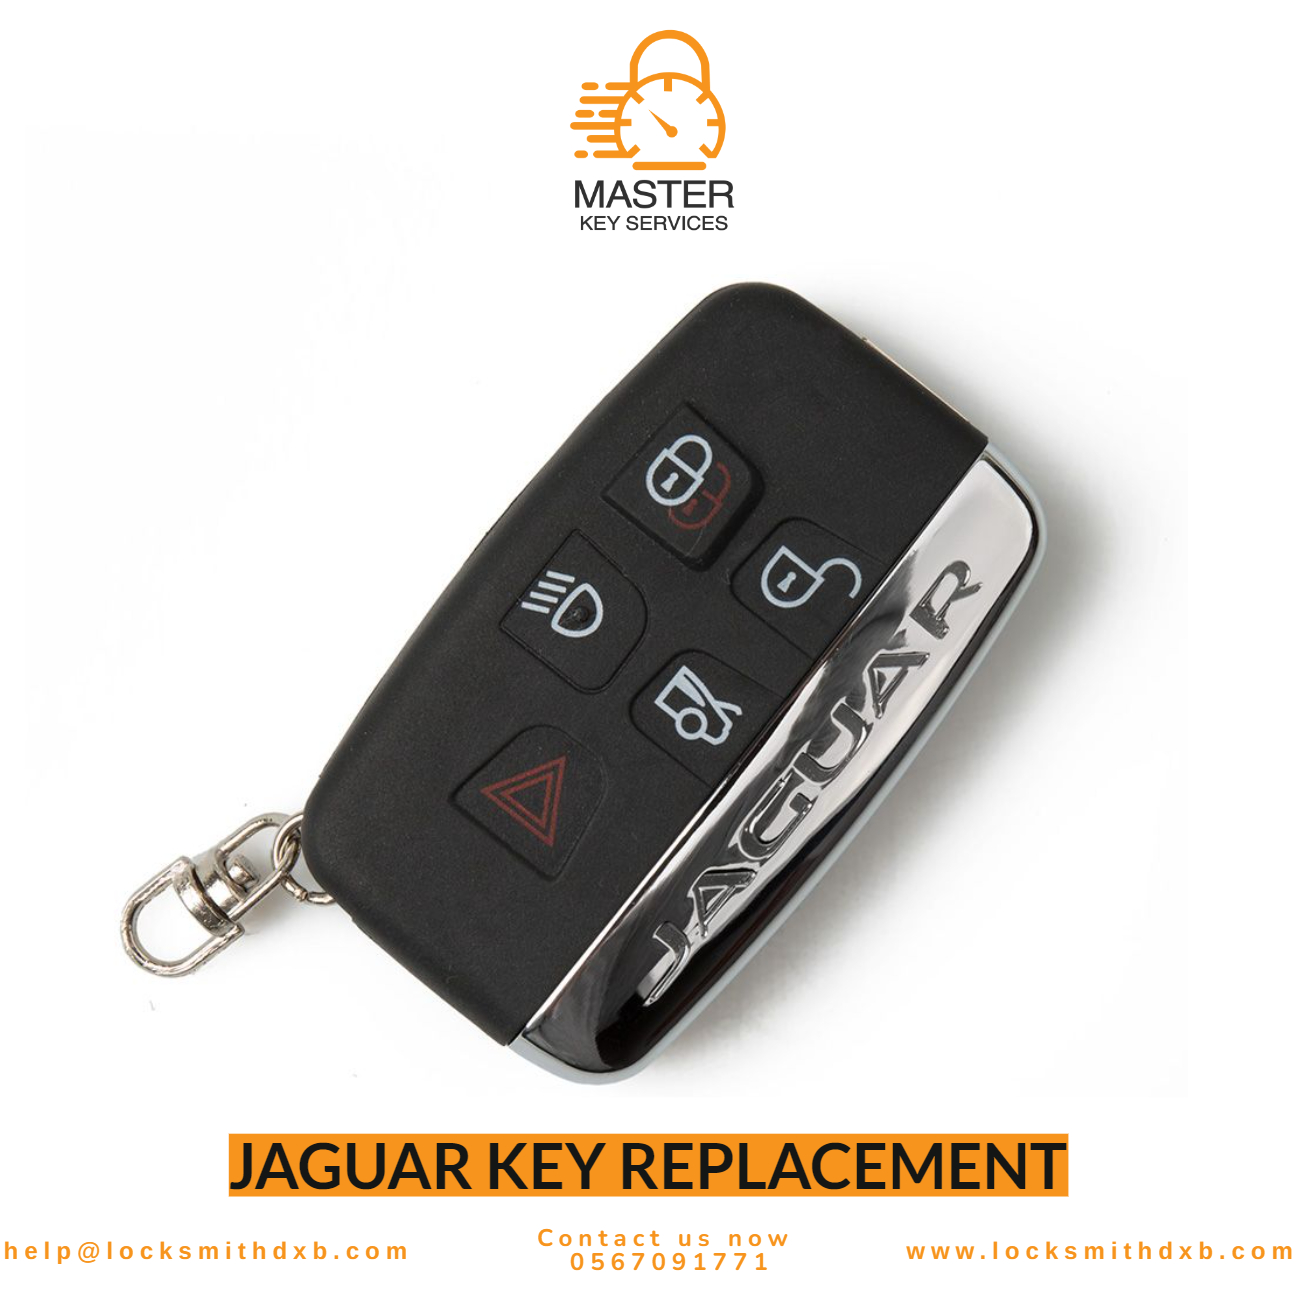 Jaguar key replacement